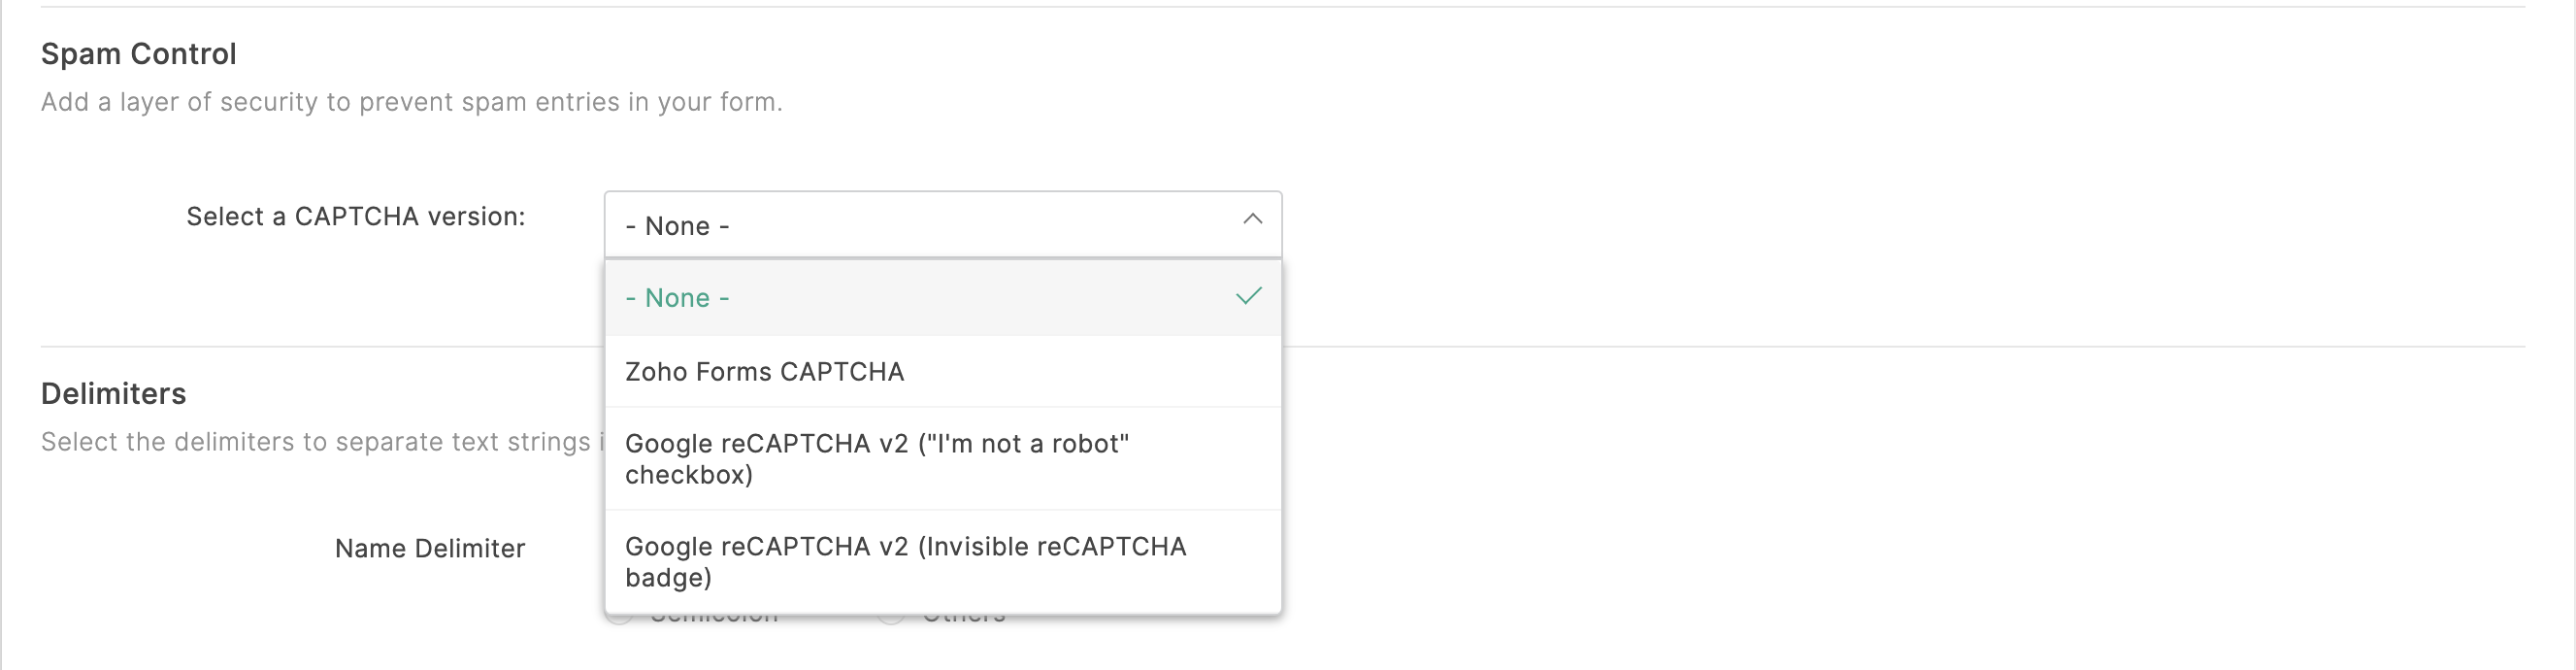 Select a CAPTCHA version